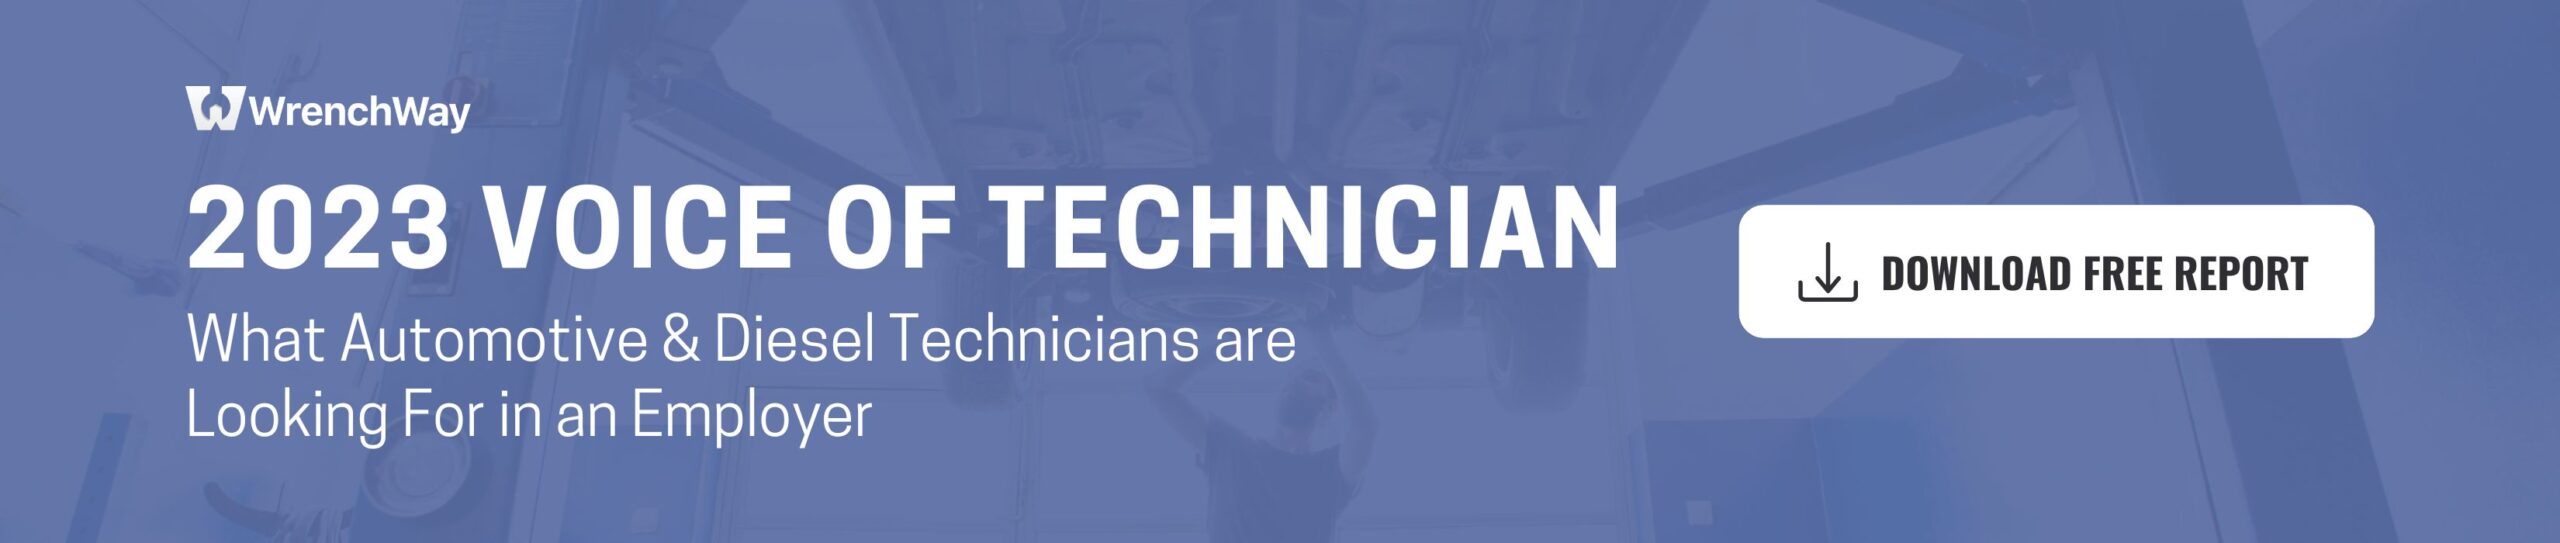 Voice of Technician Summary banner ad